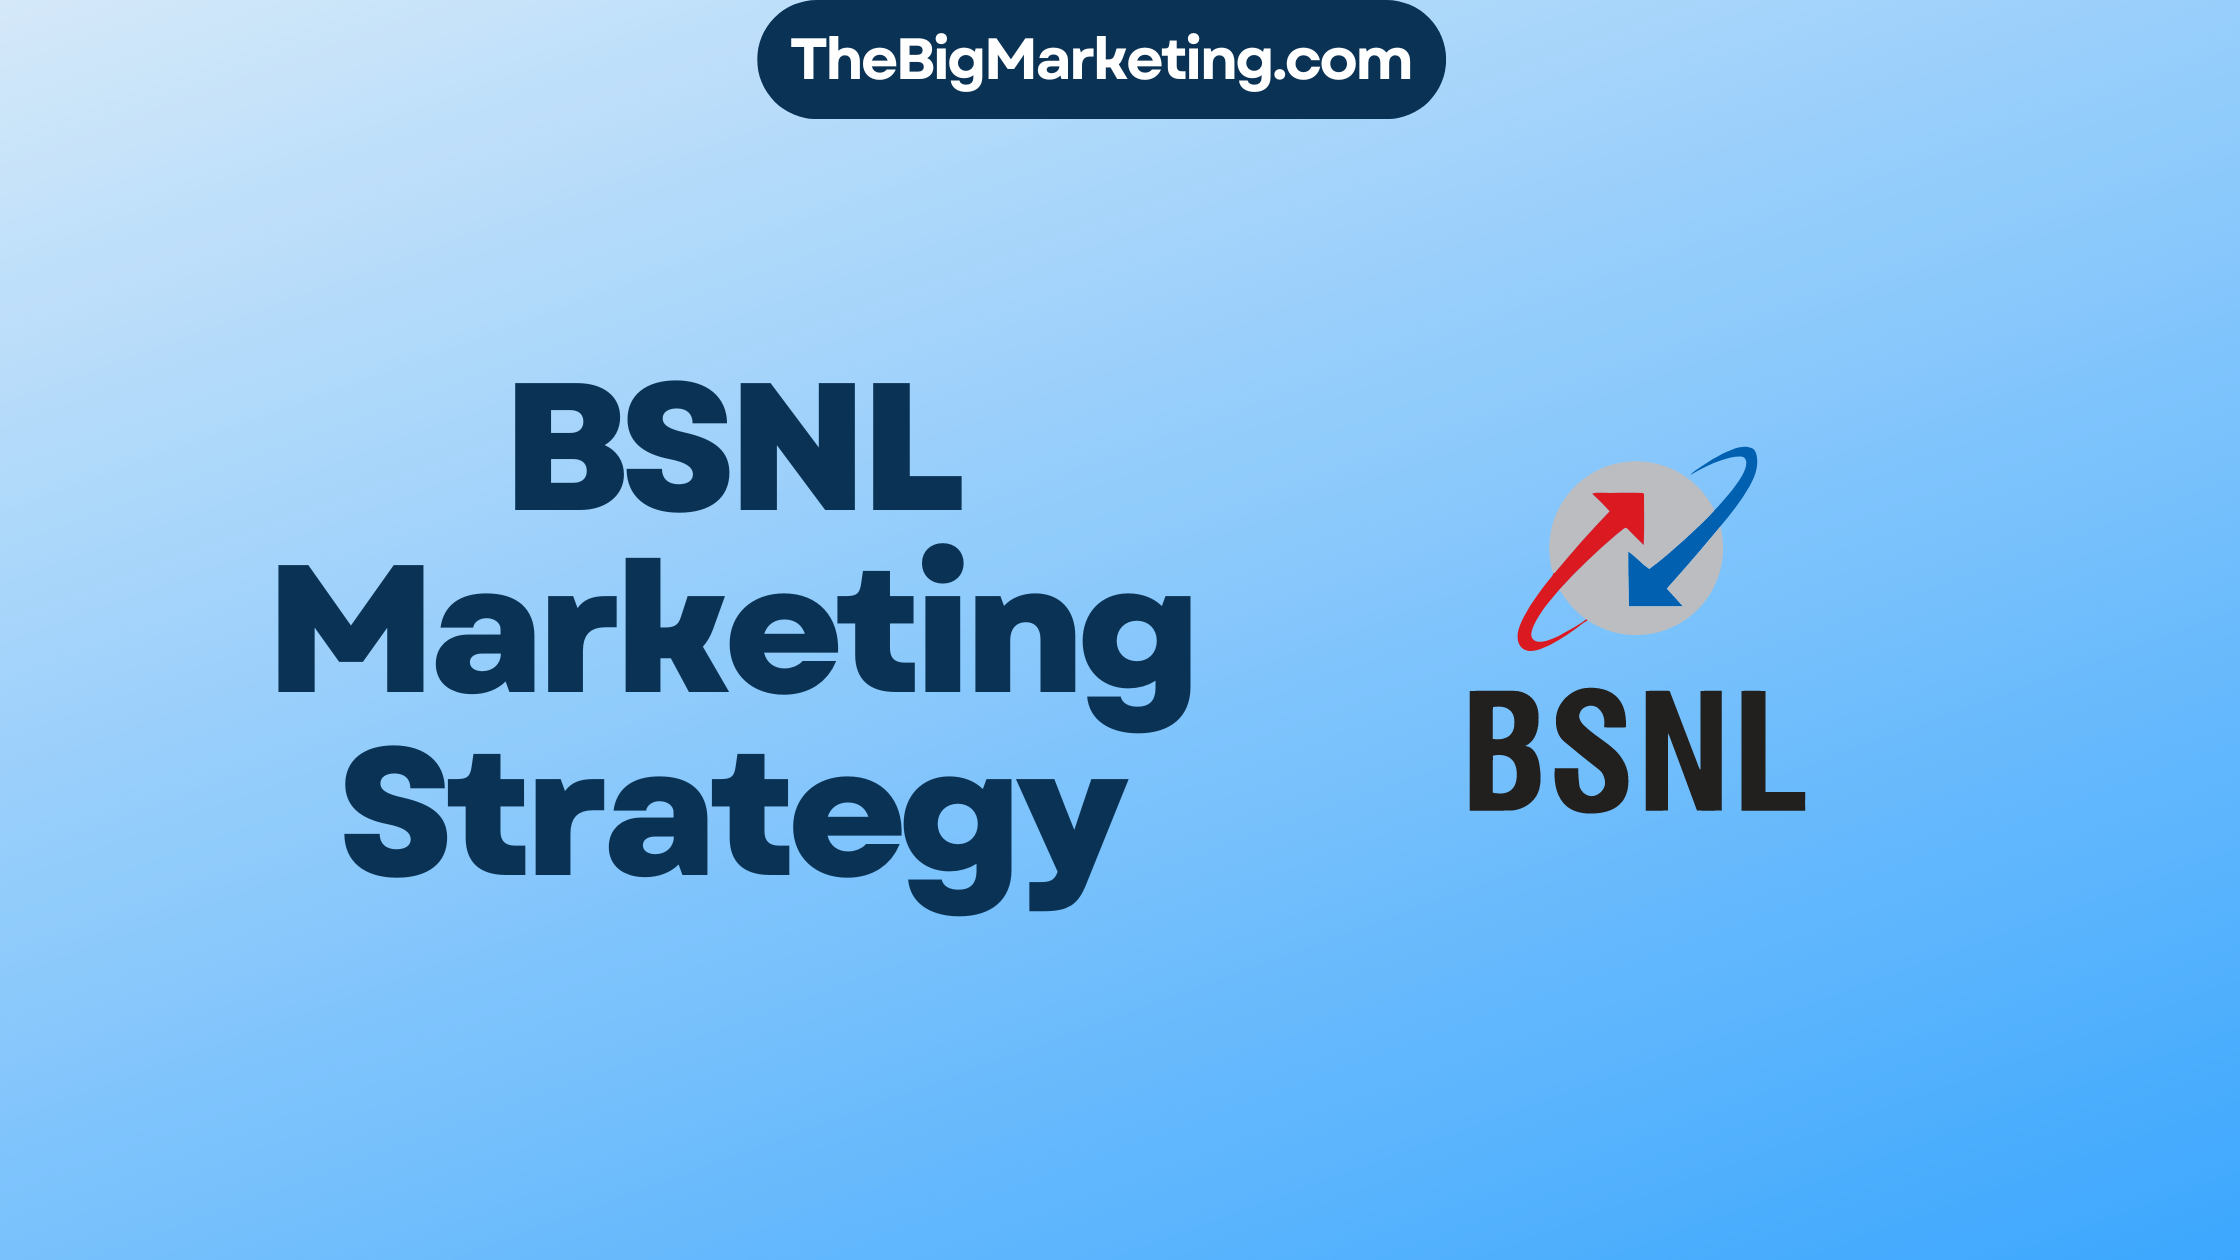 BSNL Marketing Strategy